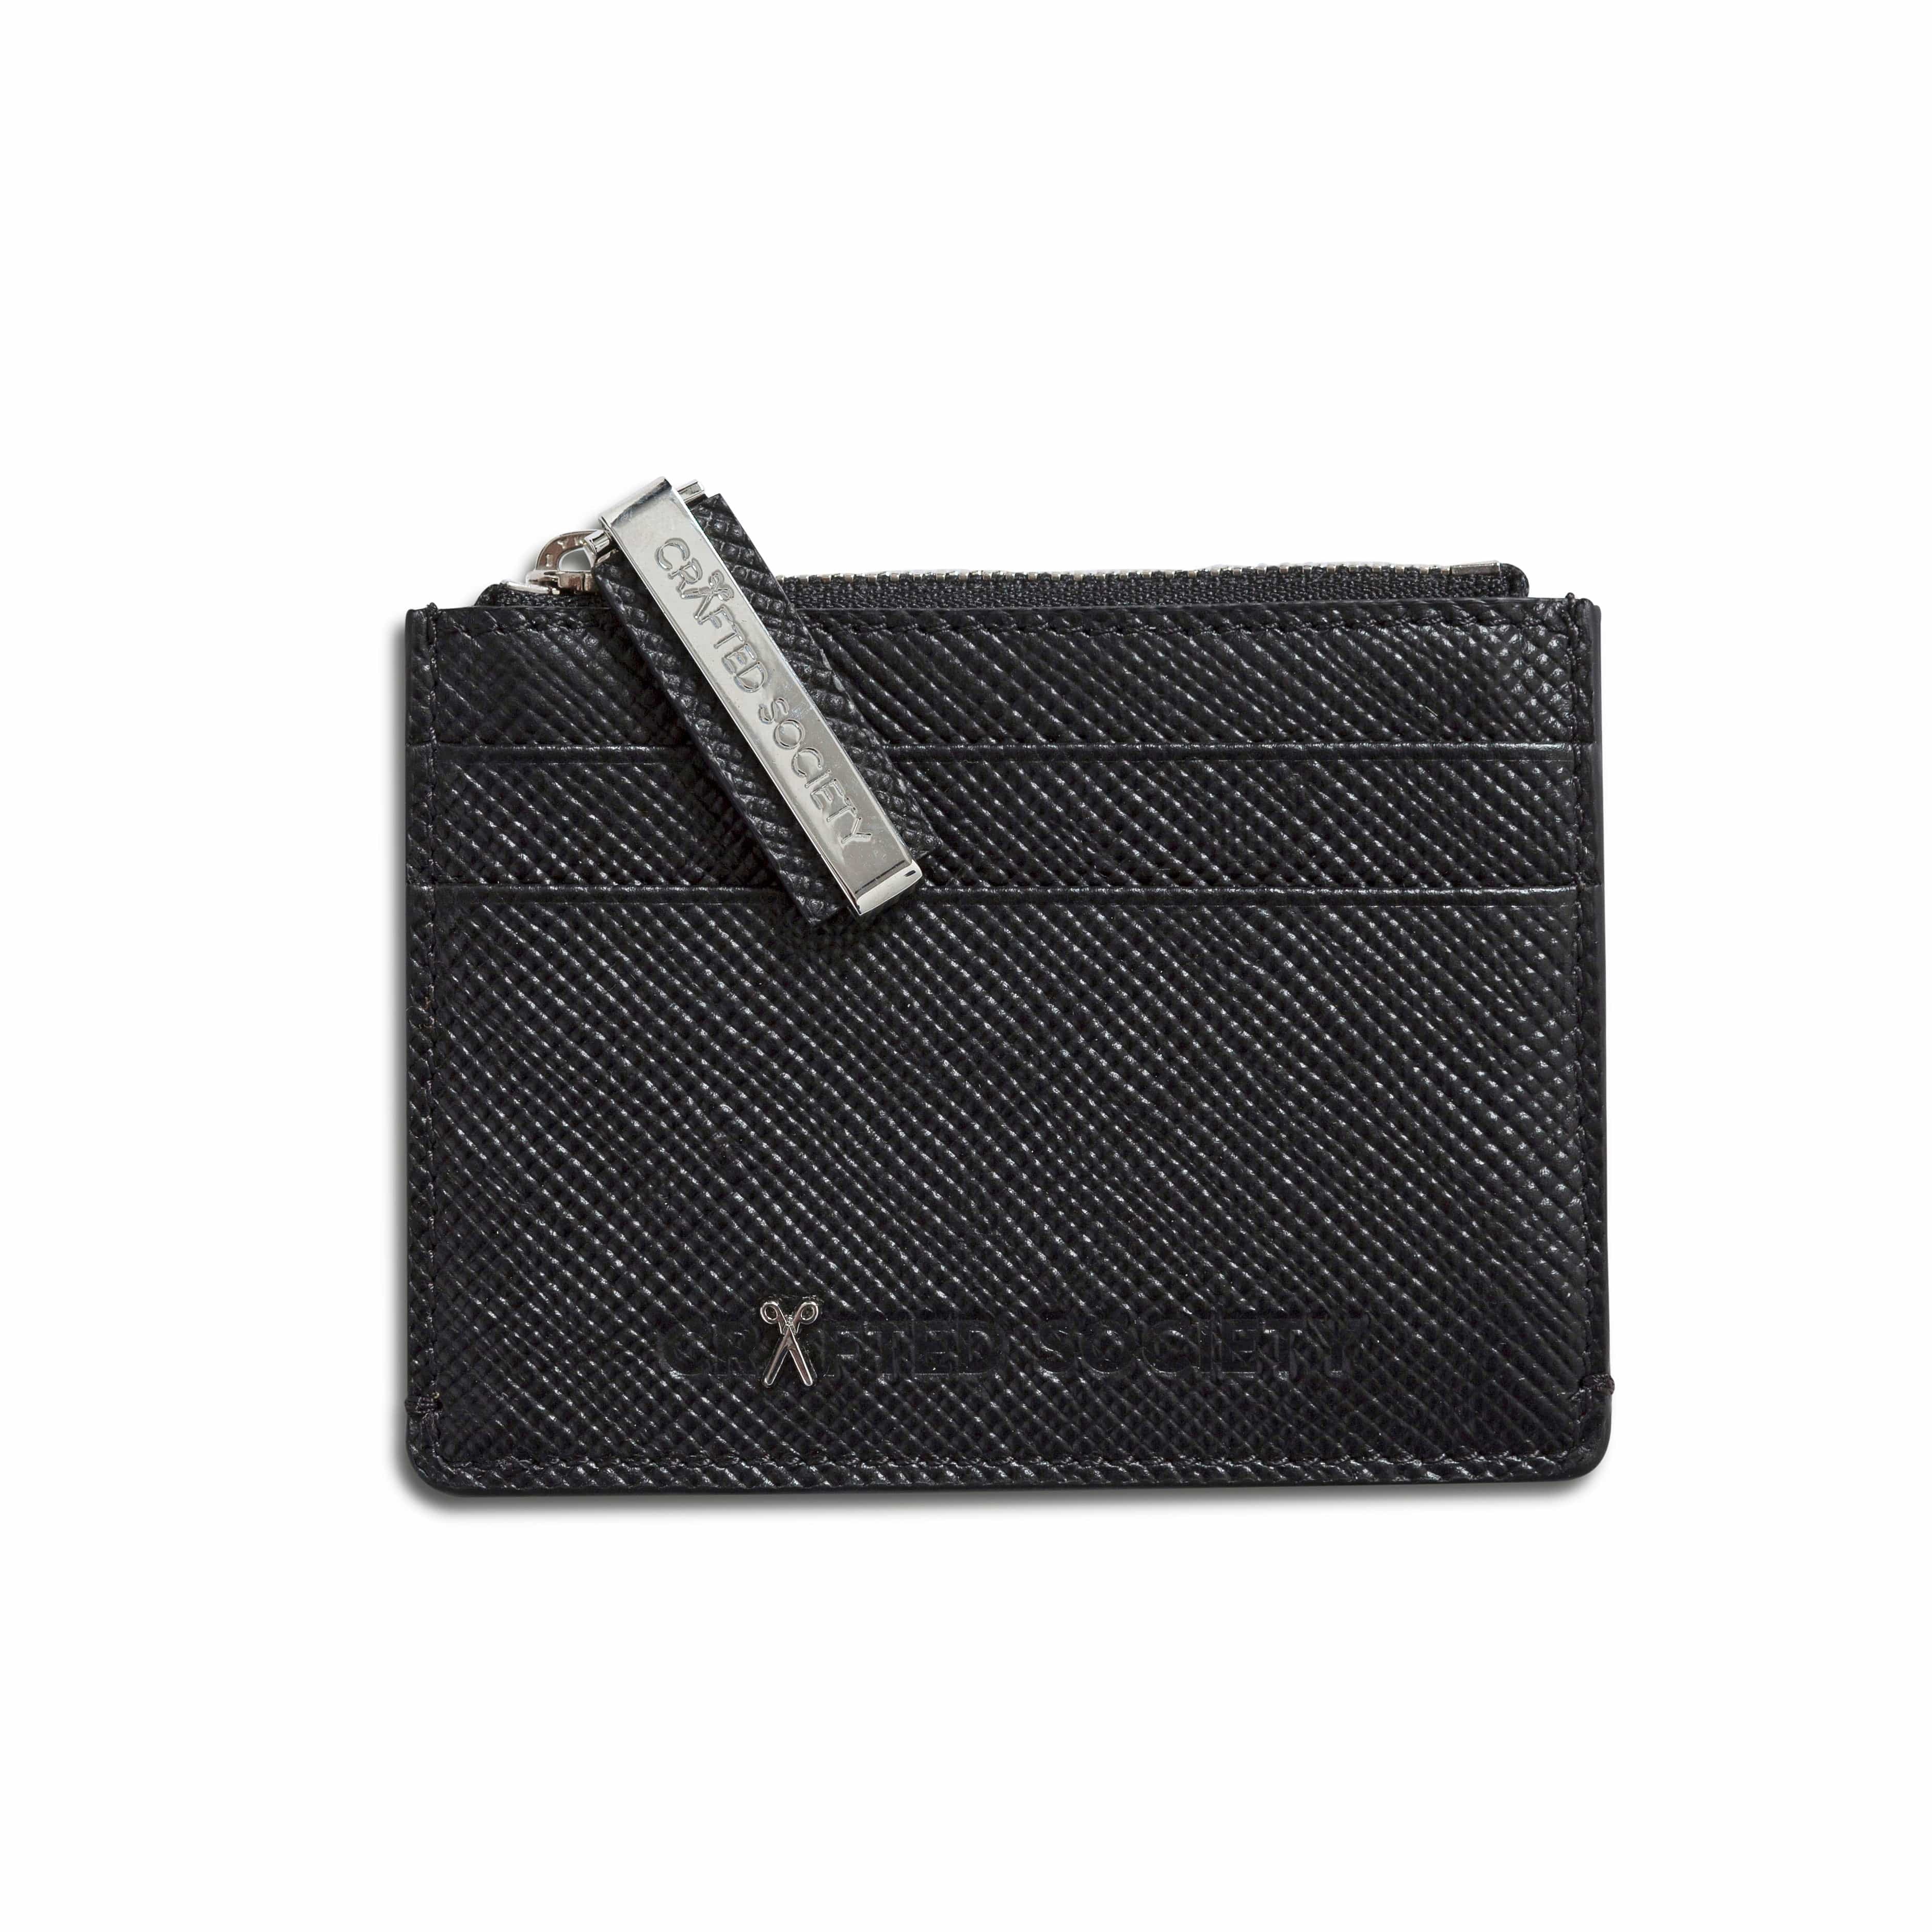 Sauro Leather Card Holder - Black Saffiano Leather